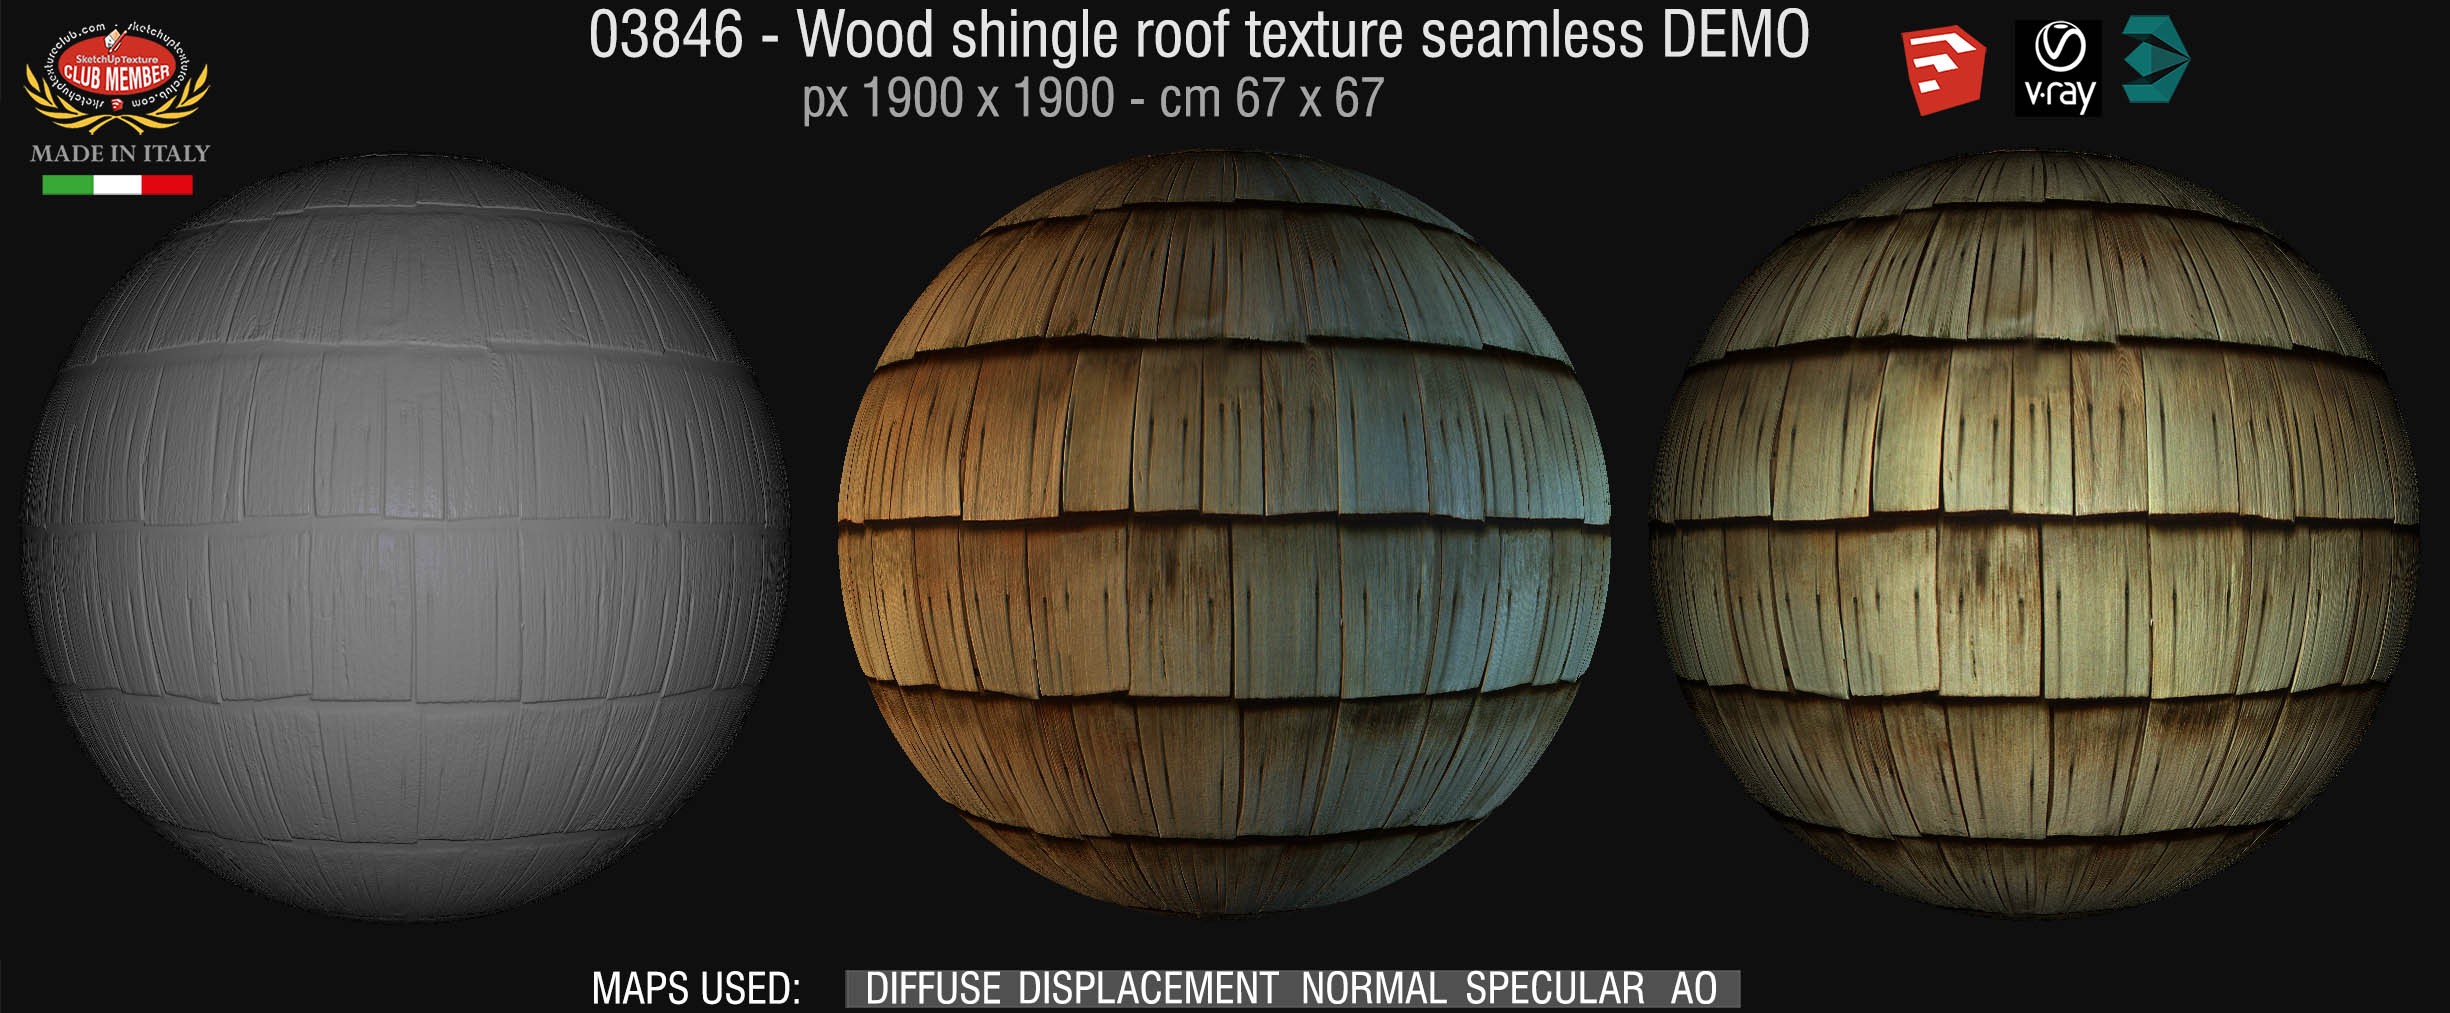 03846 Wood shingle roof texture seamless + maps DEMO